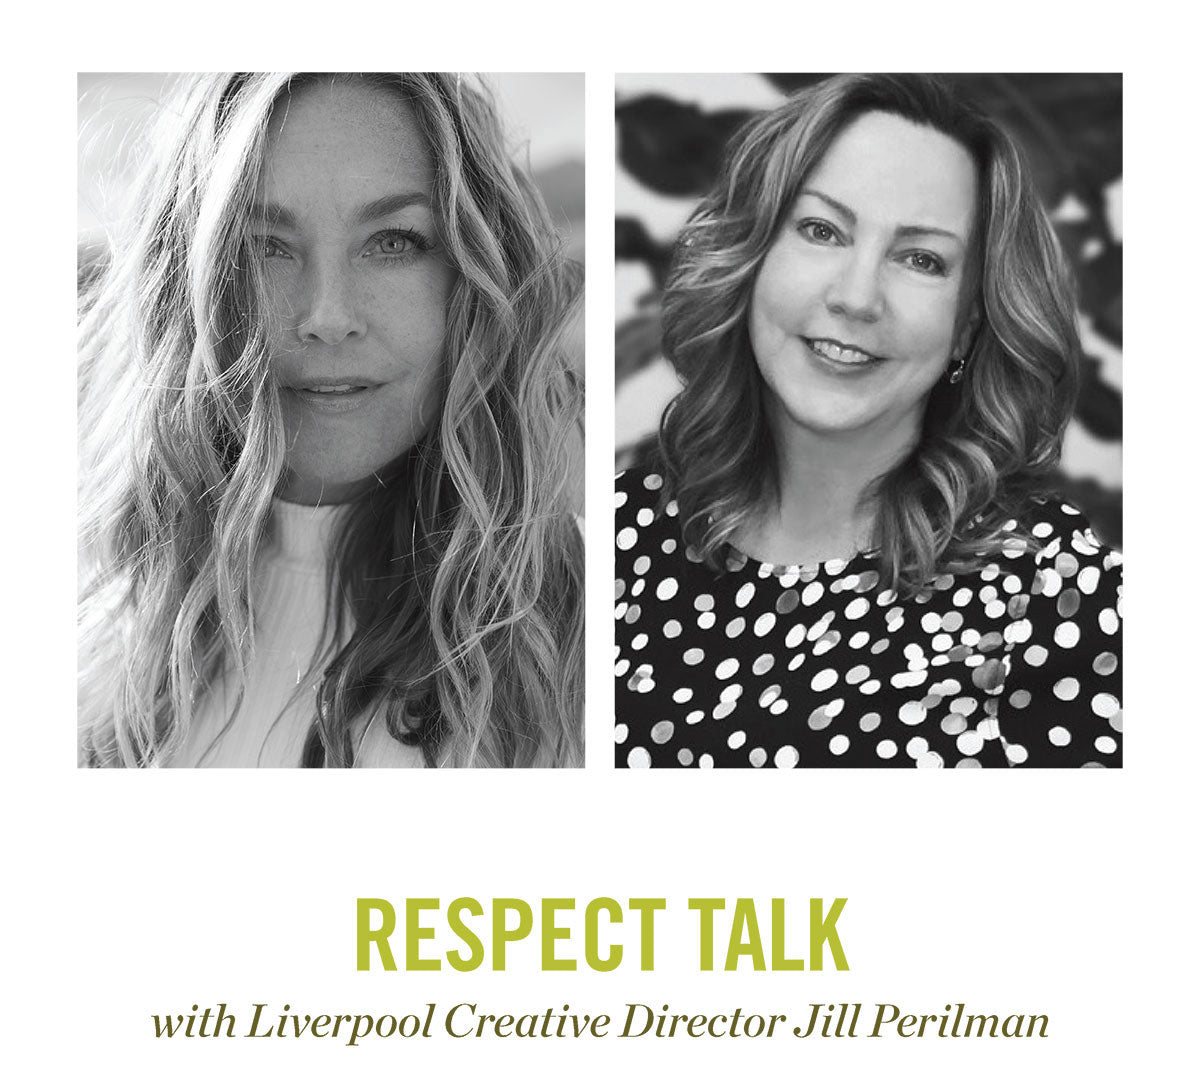 RESPECT TALK with Liverpool Creative Director Jill Perilman